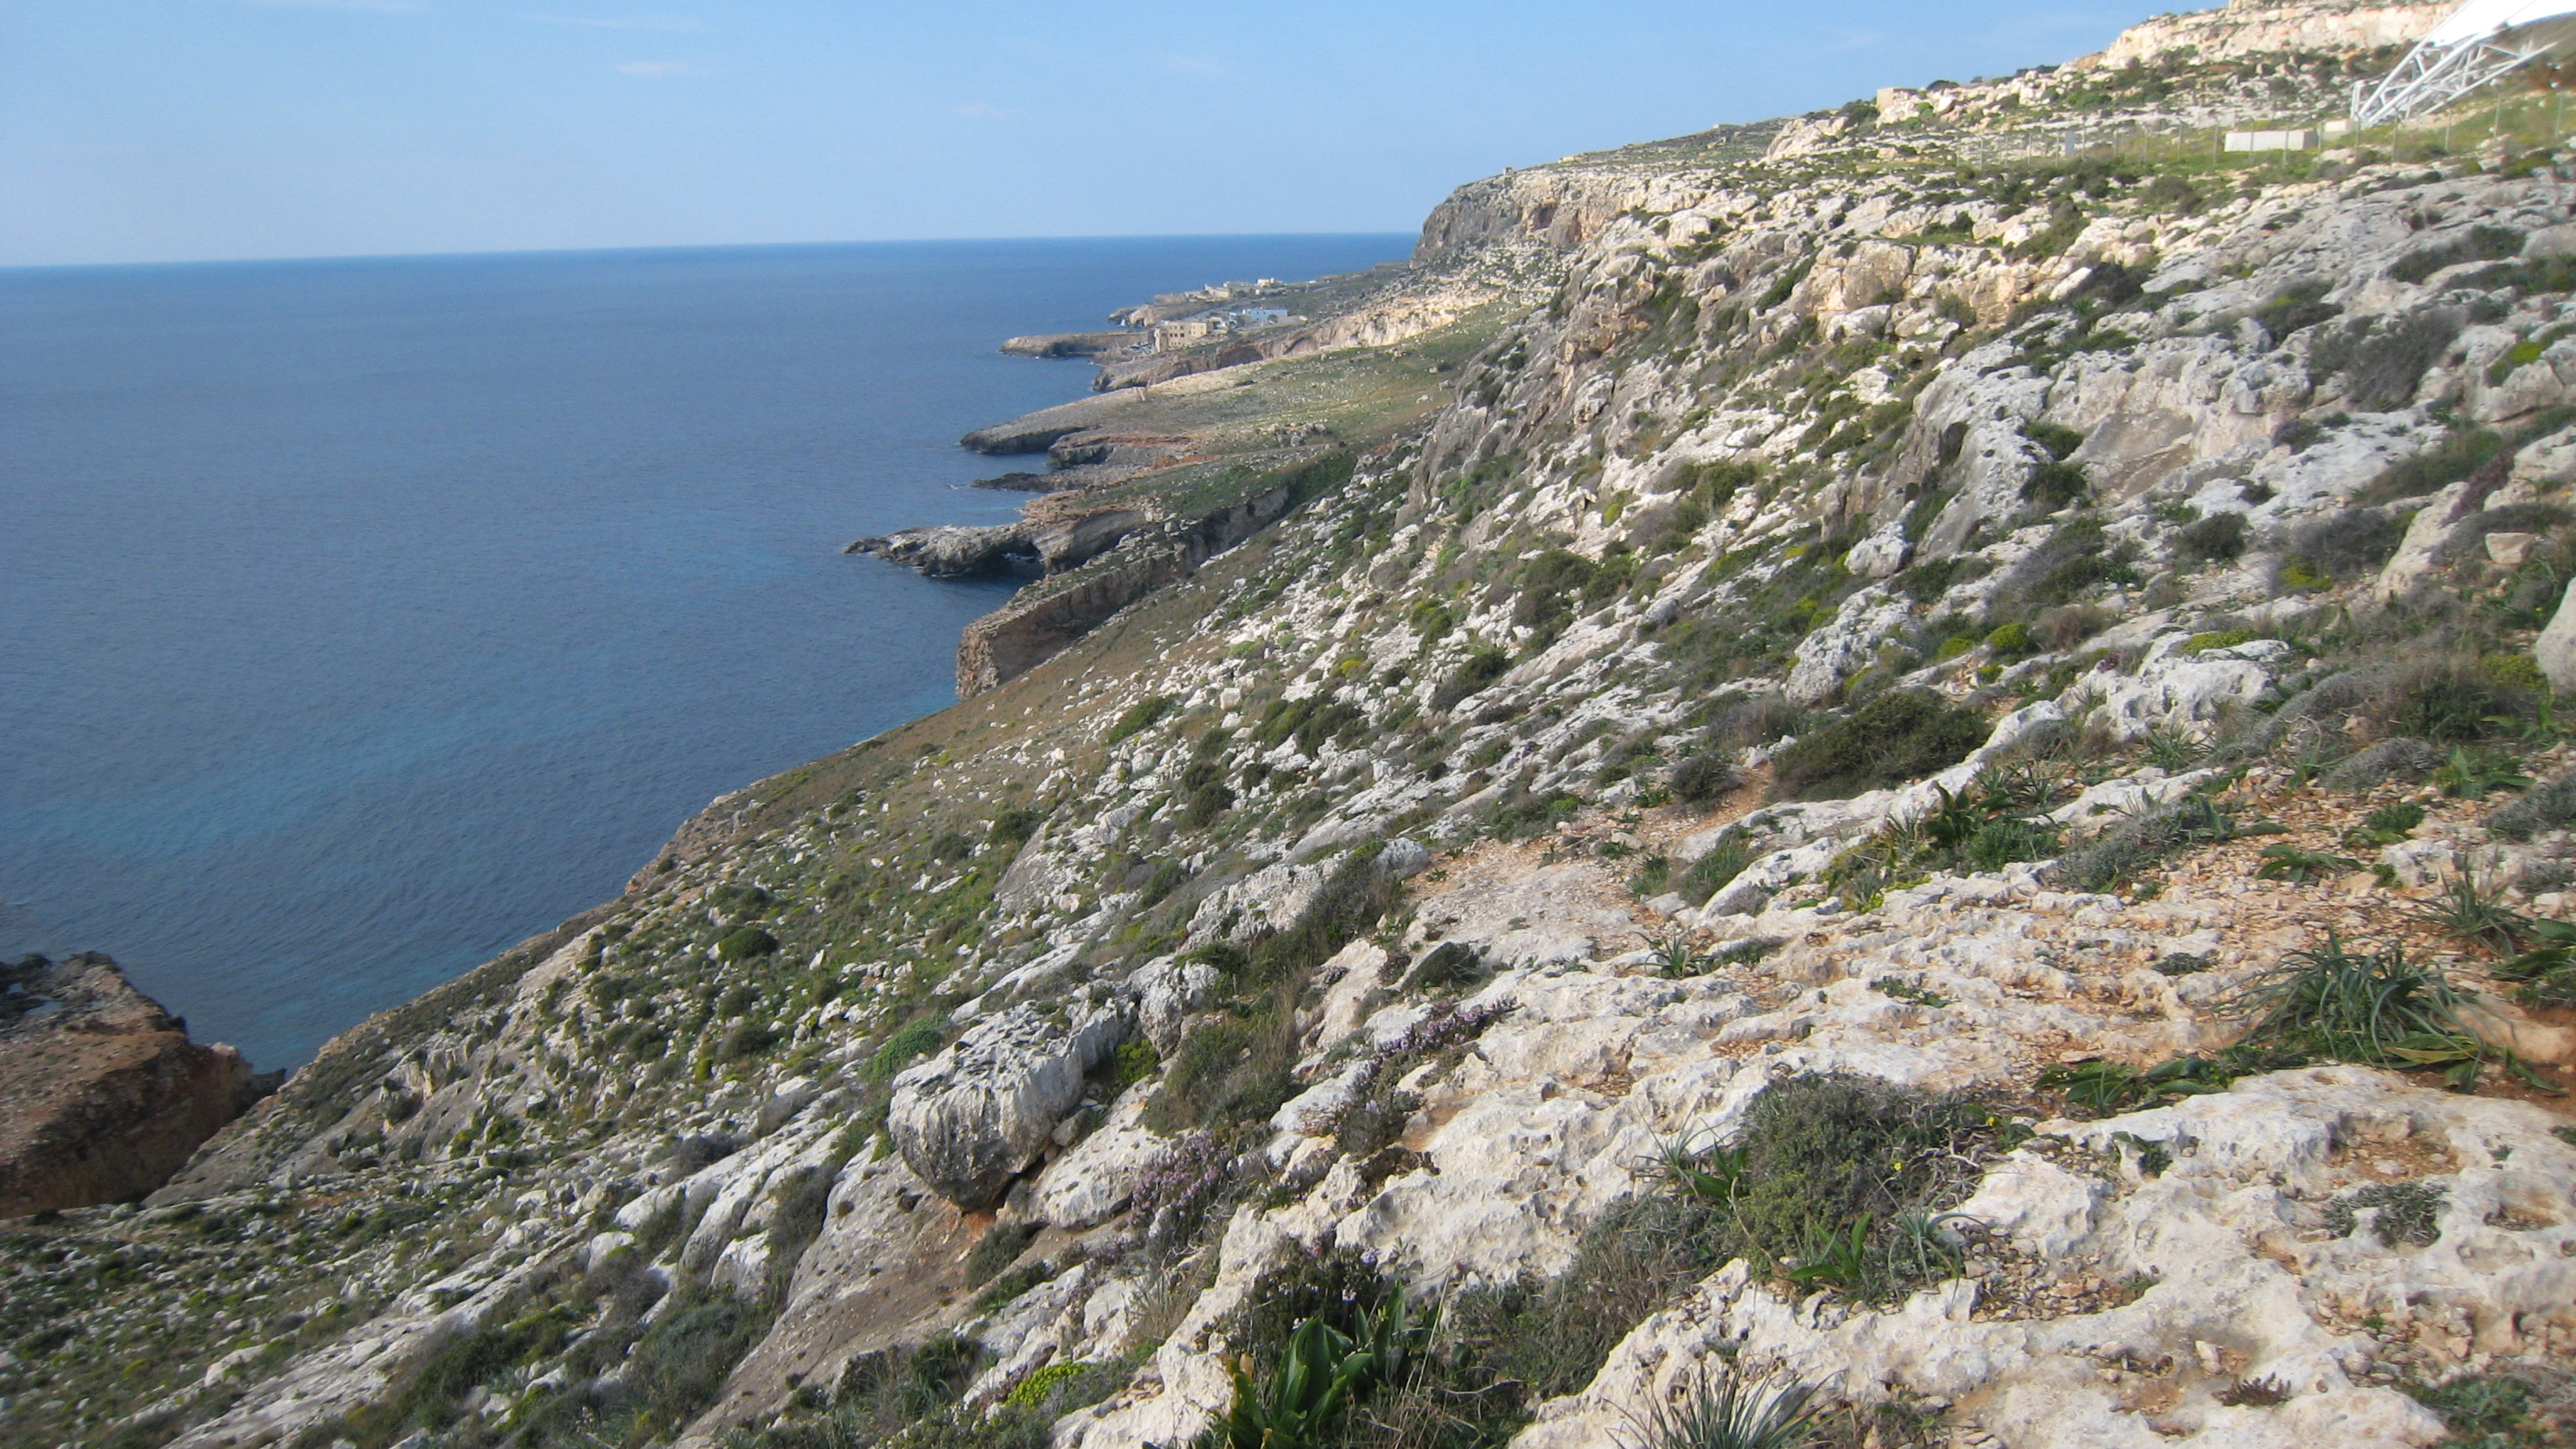 Malta Coastal walk: Near Dingli